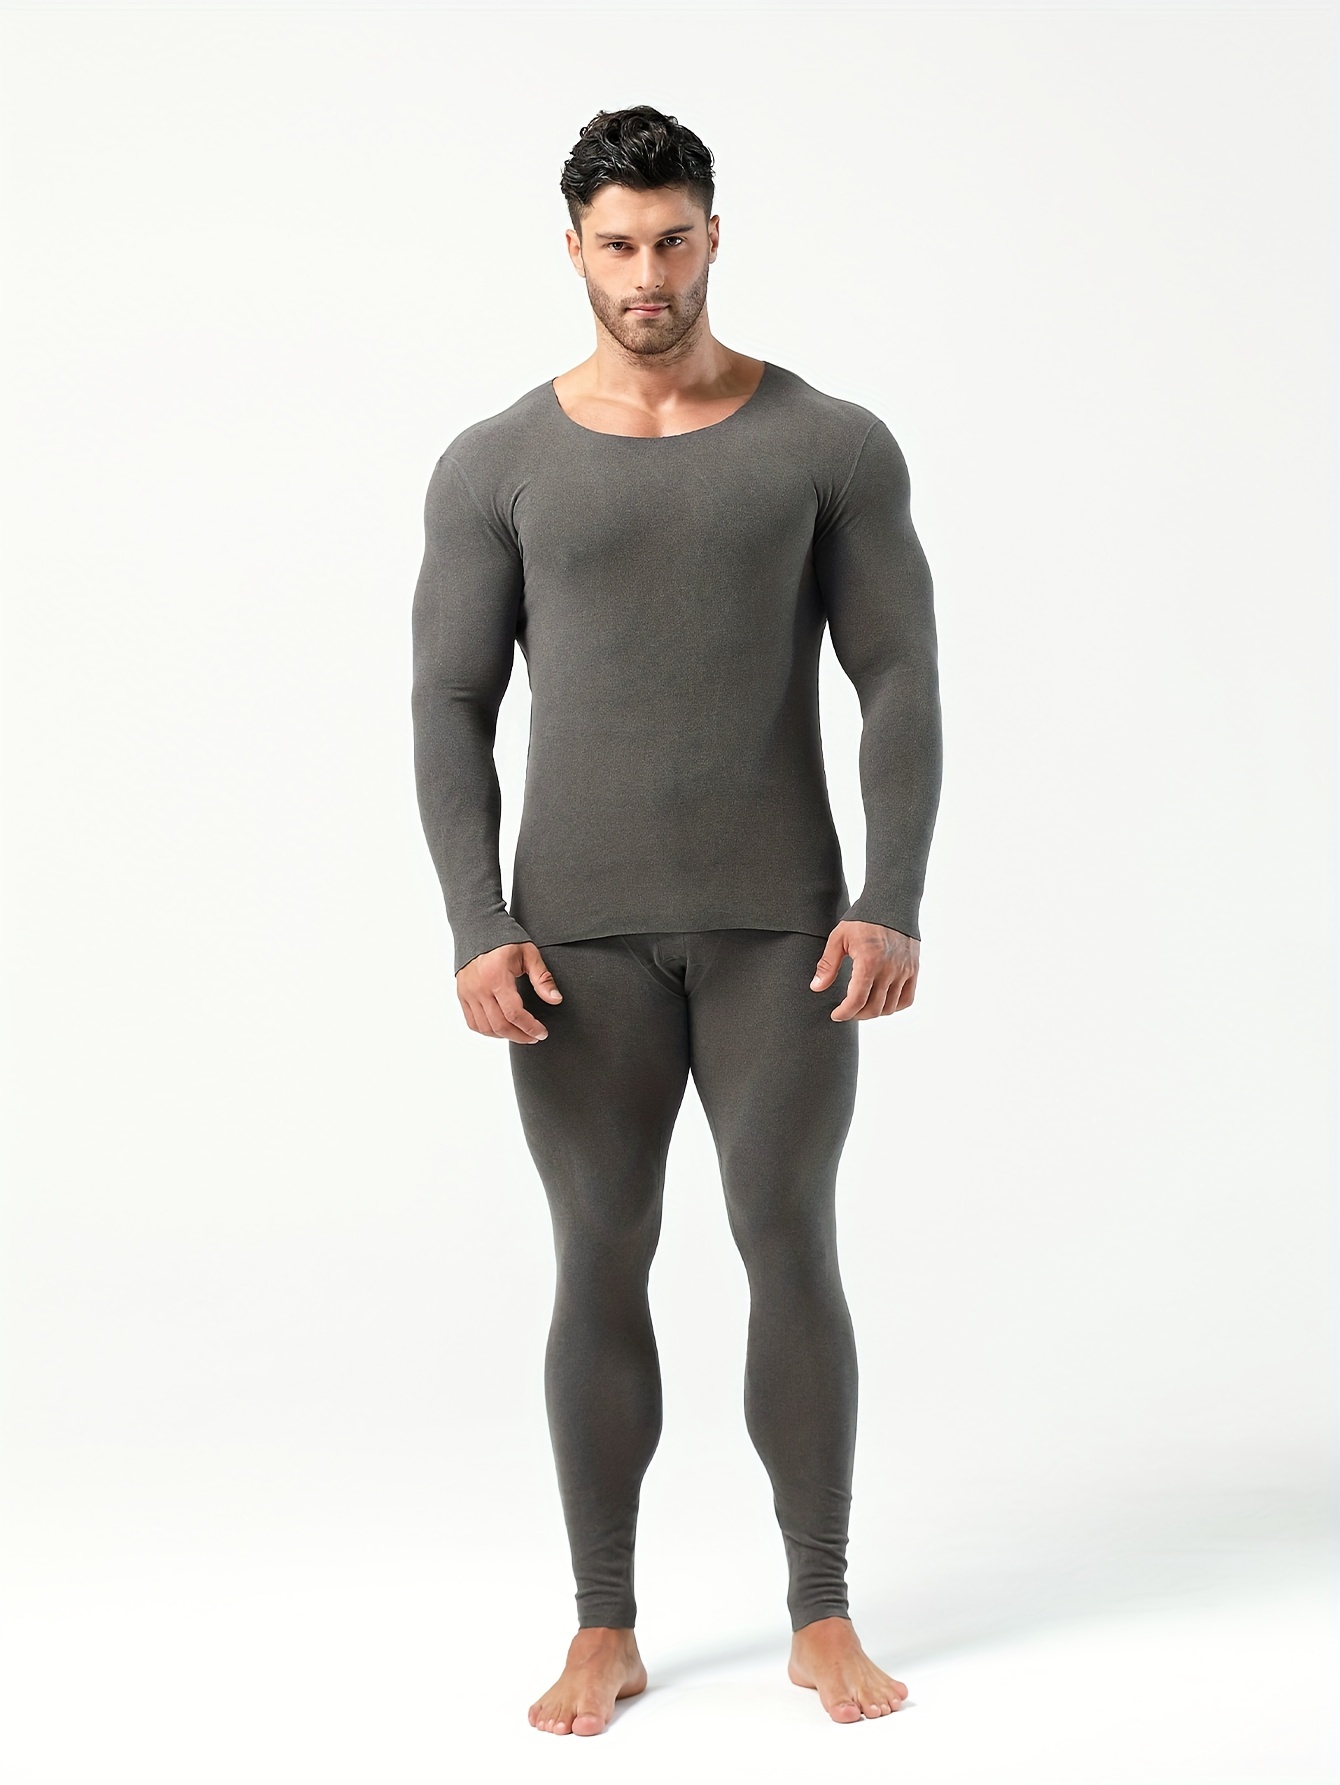 Mens Long Underwear Set Bottom and Top Thermal Long Johns Fleece